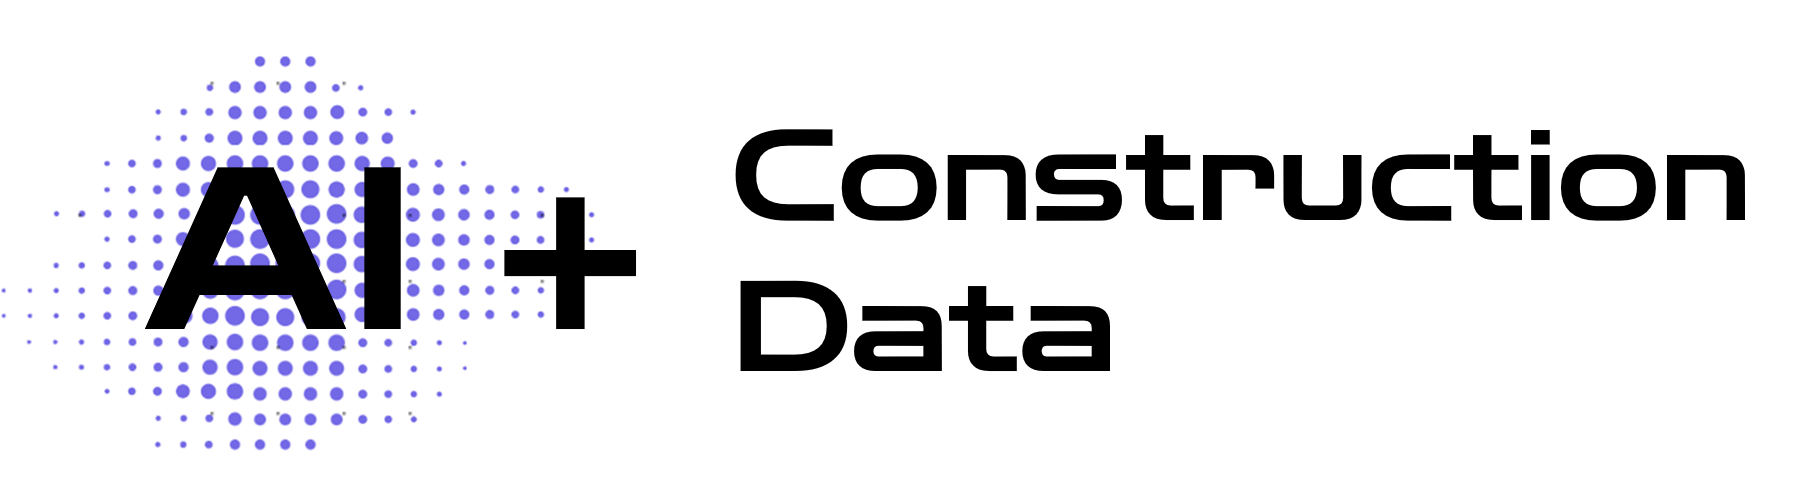 AI + Construction Data with logo branding